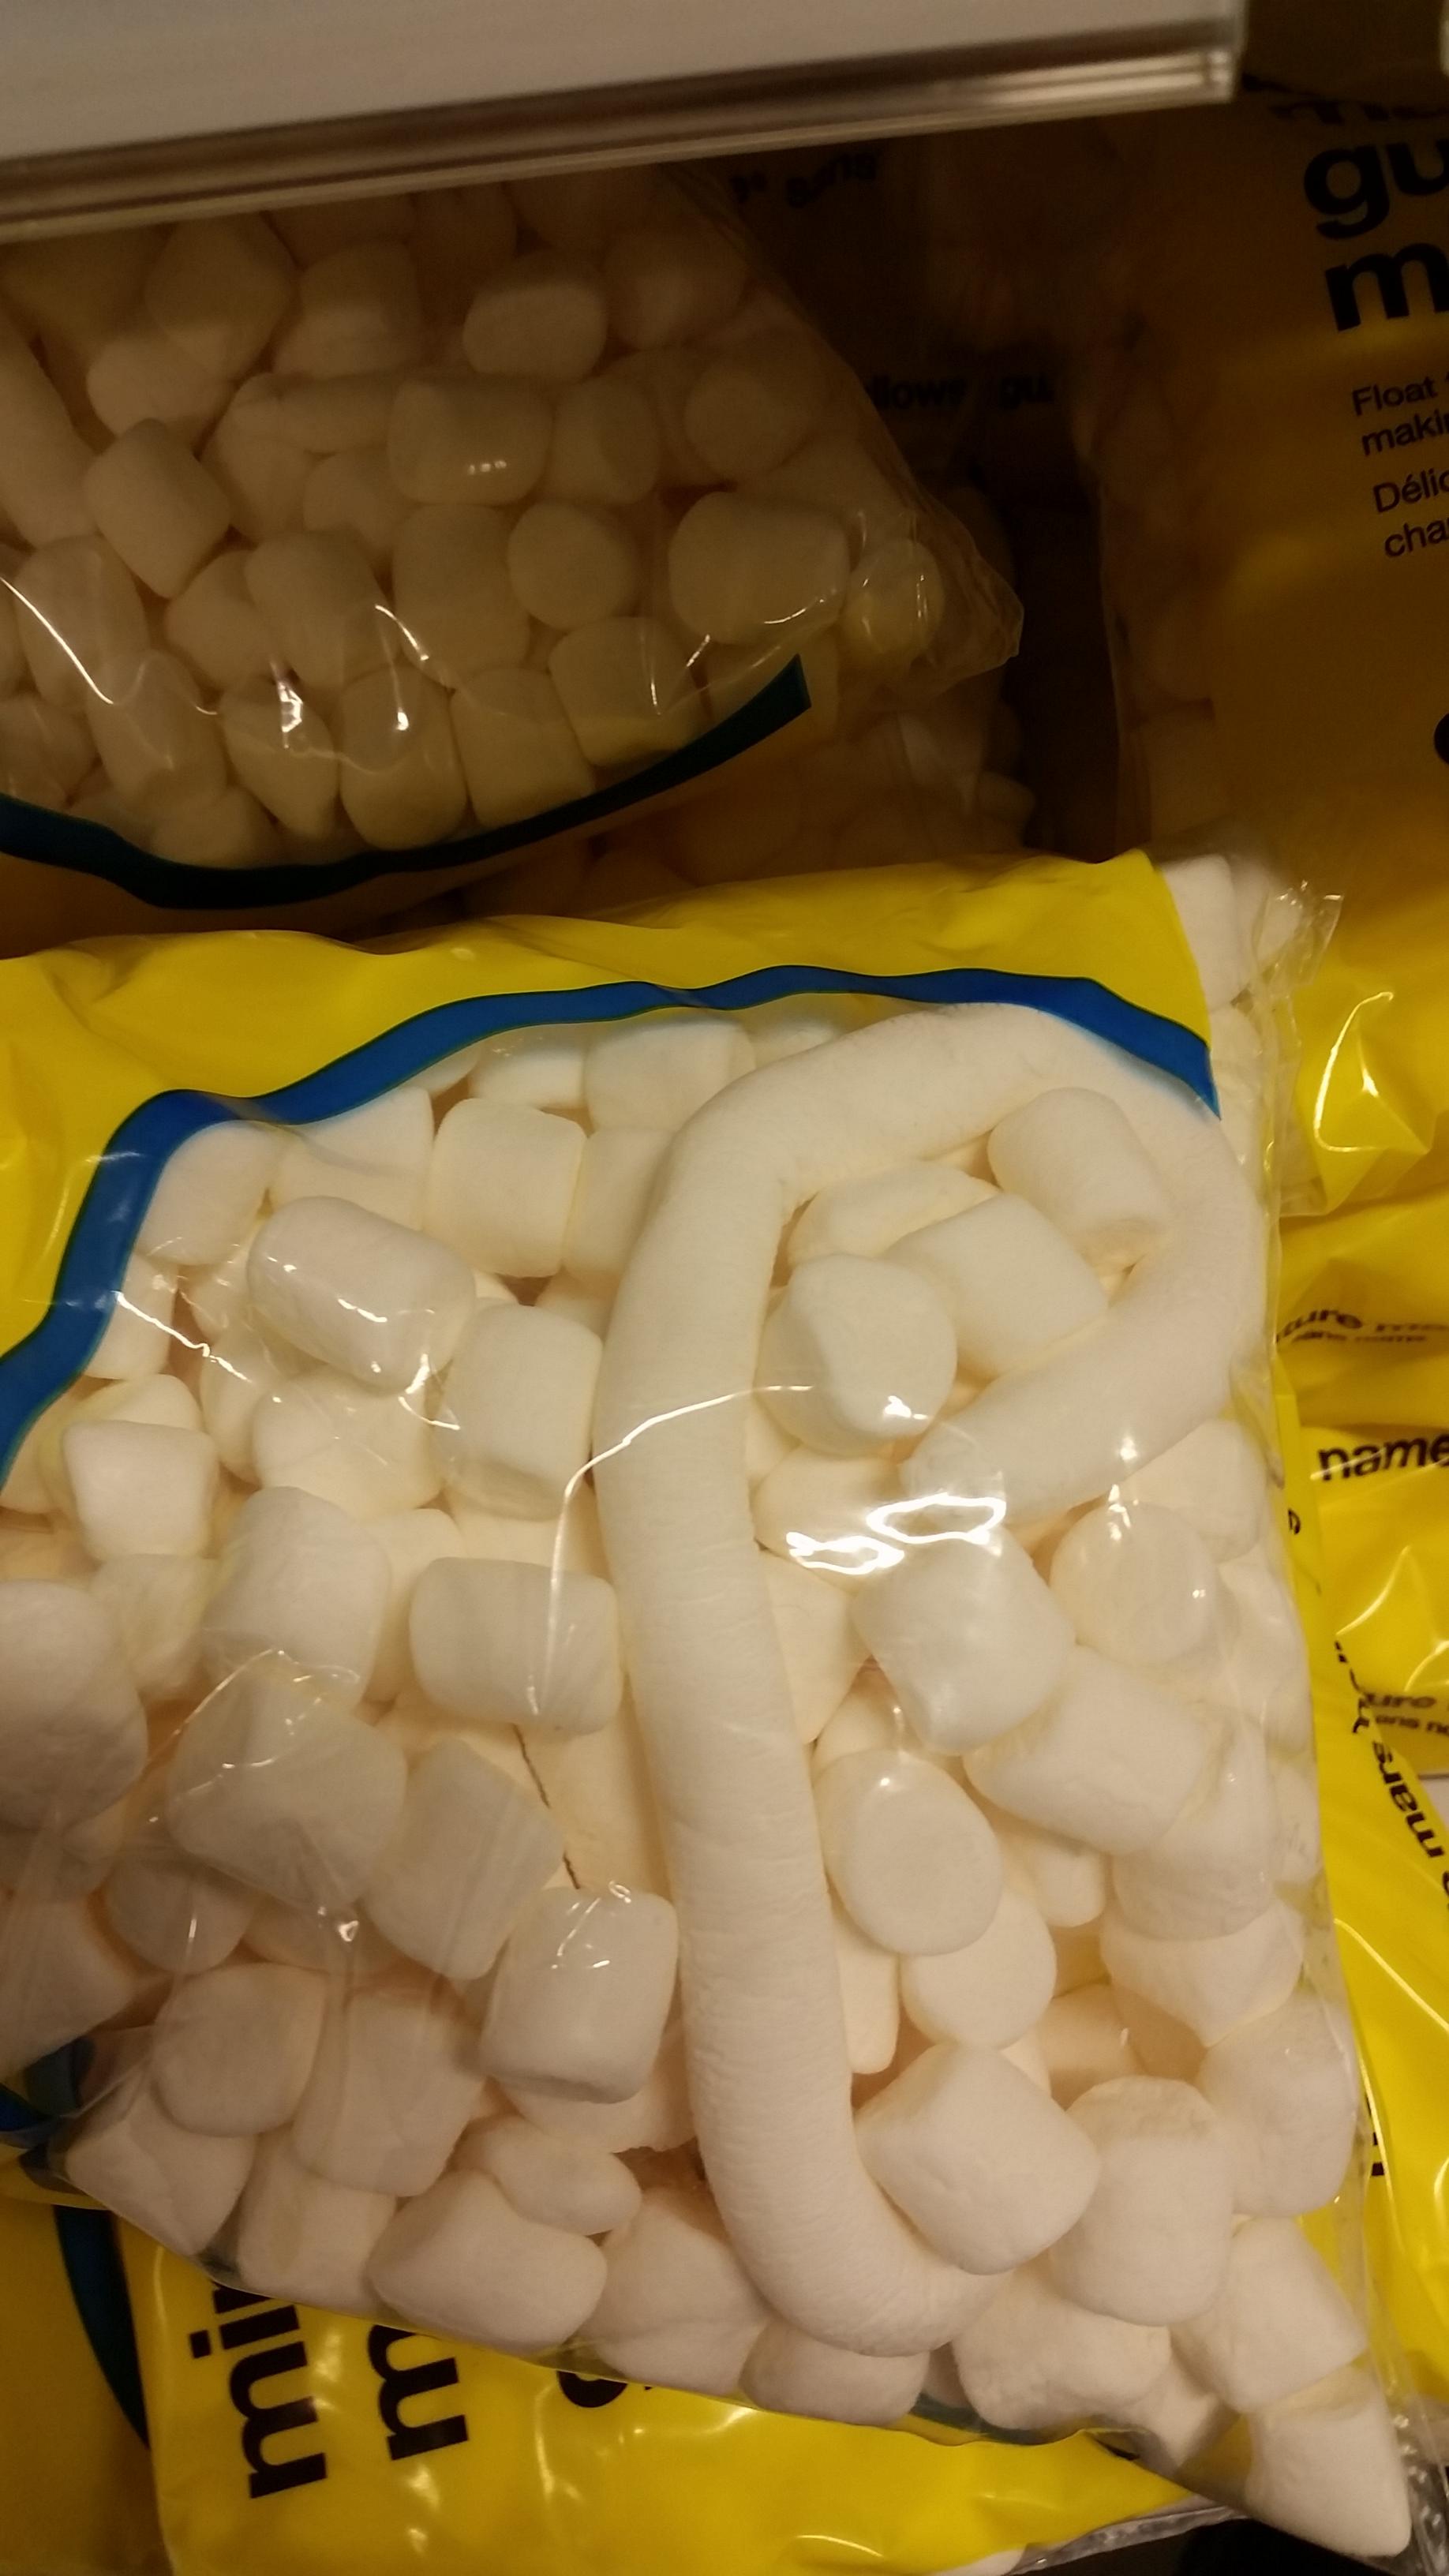 A really long marshmallow.